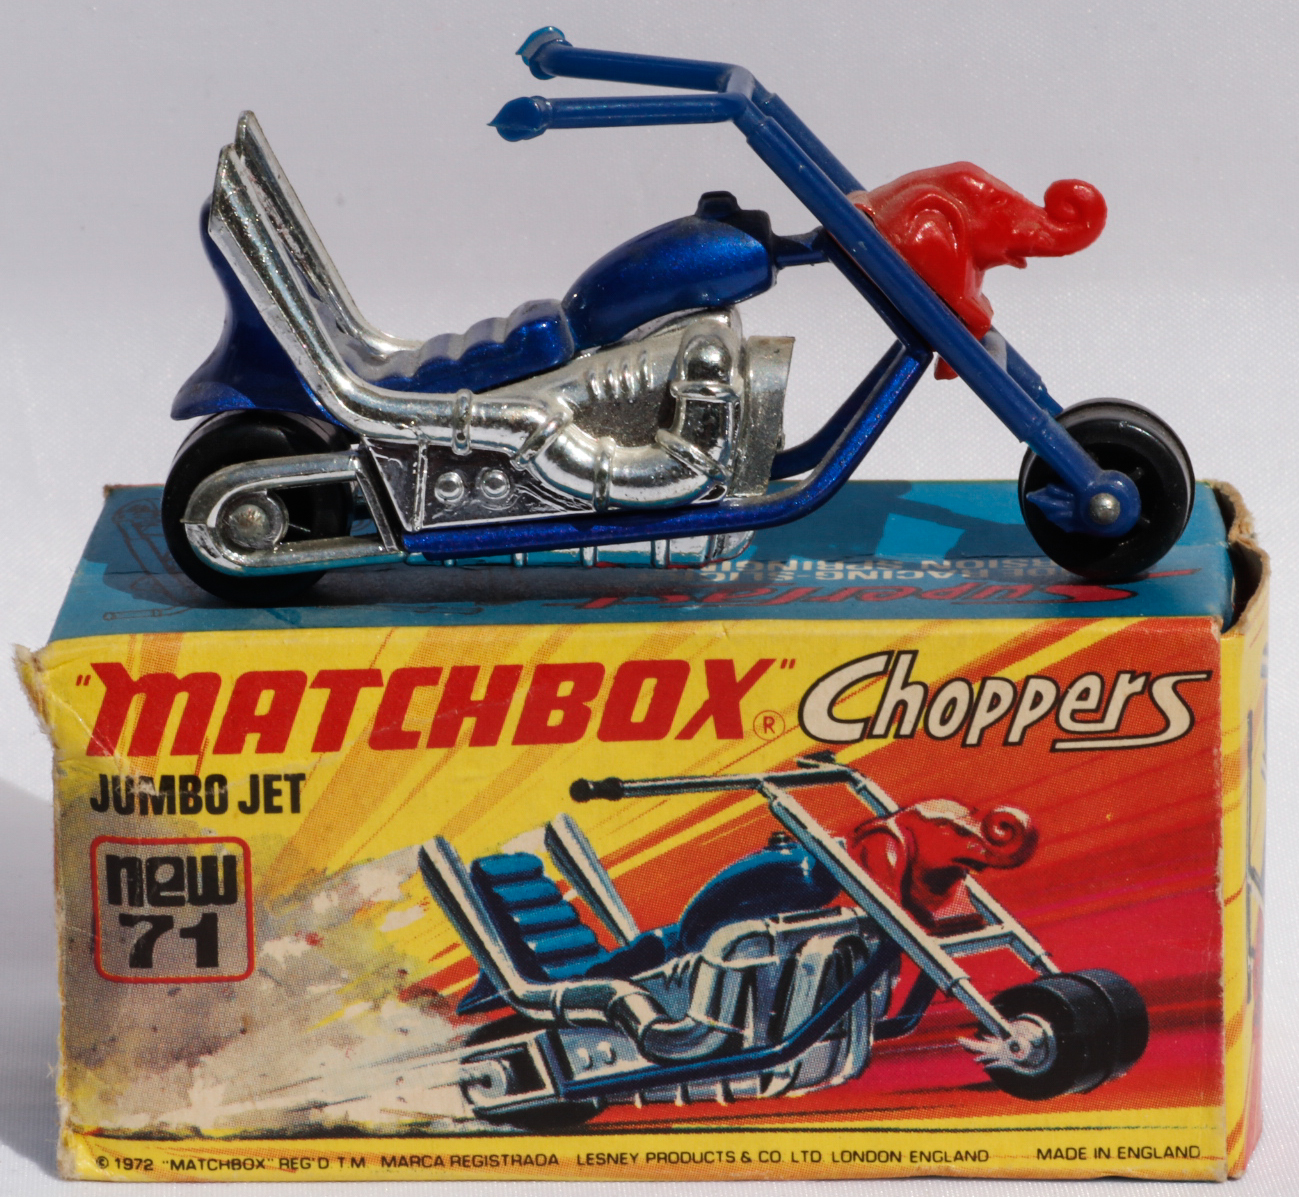 Matchbox Choppers Jumbo Jet